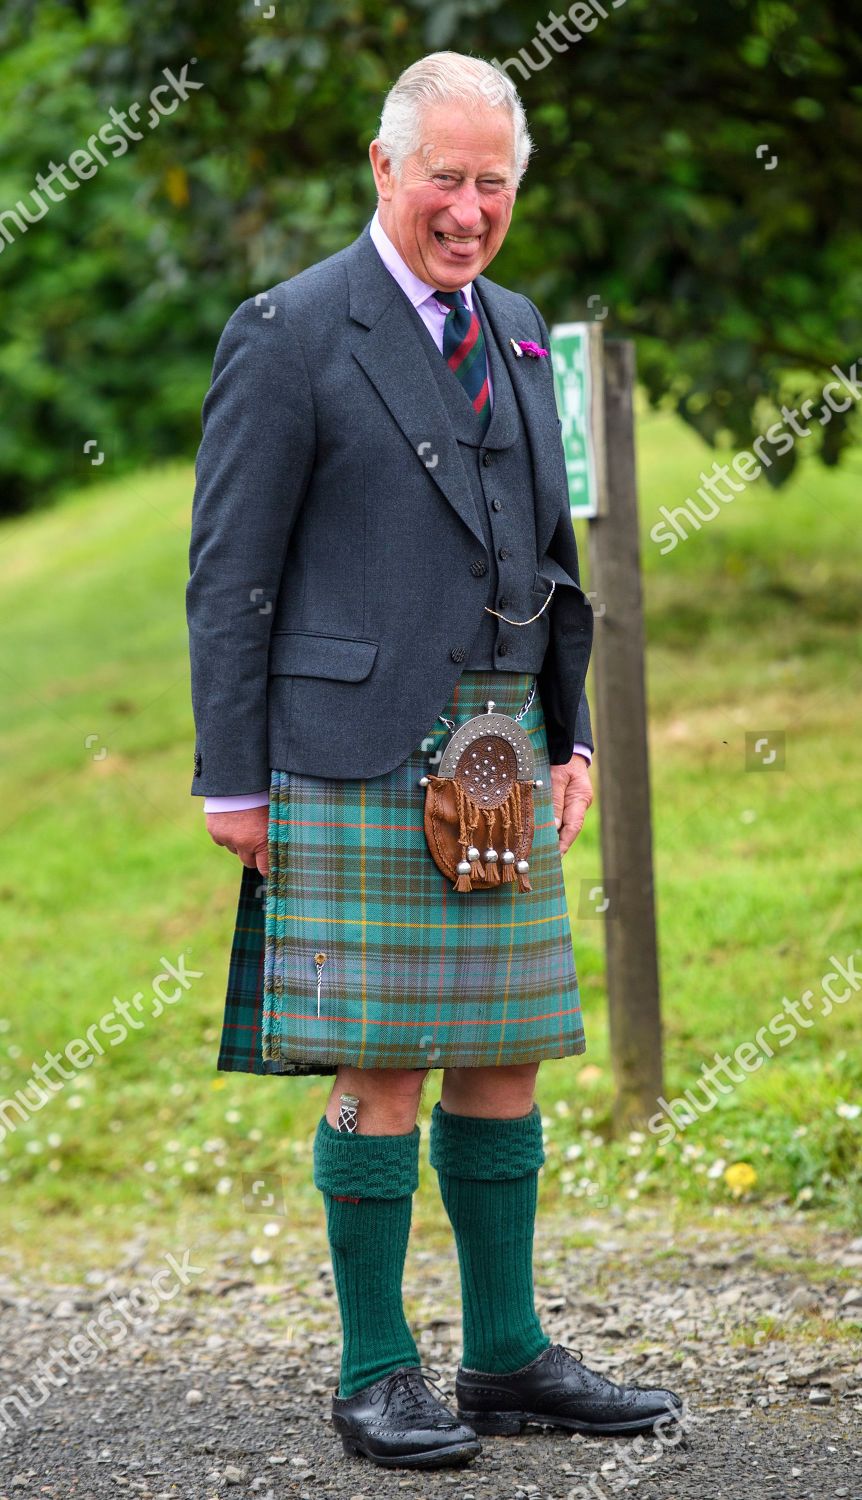 prince-charles-visits-caithness-scotland-uk-shutterstock-editorial-10349568bw.jpg